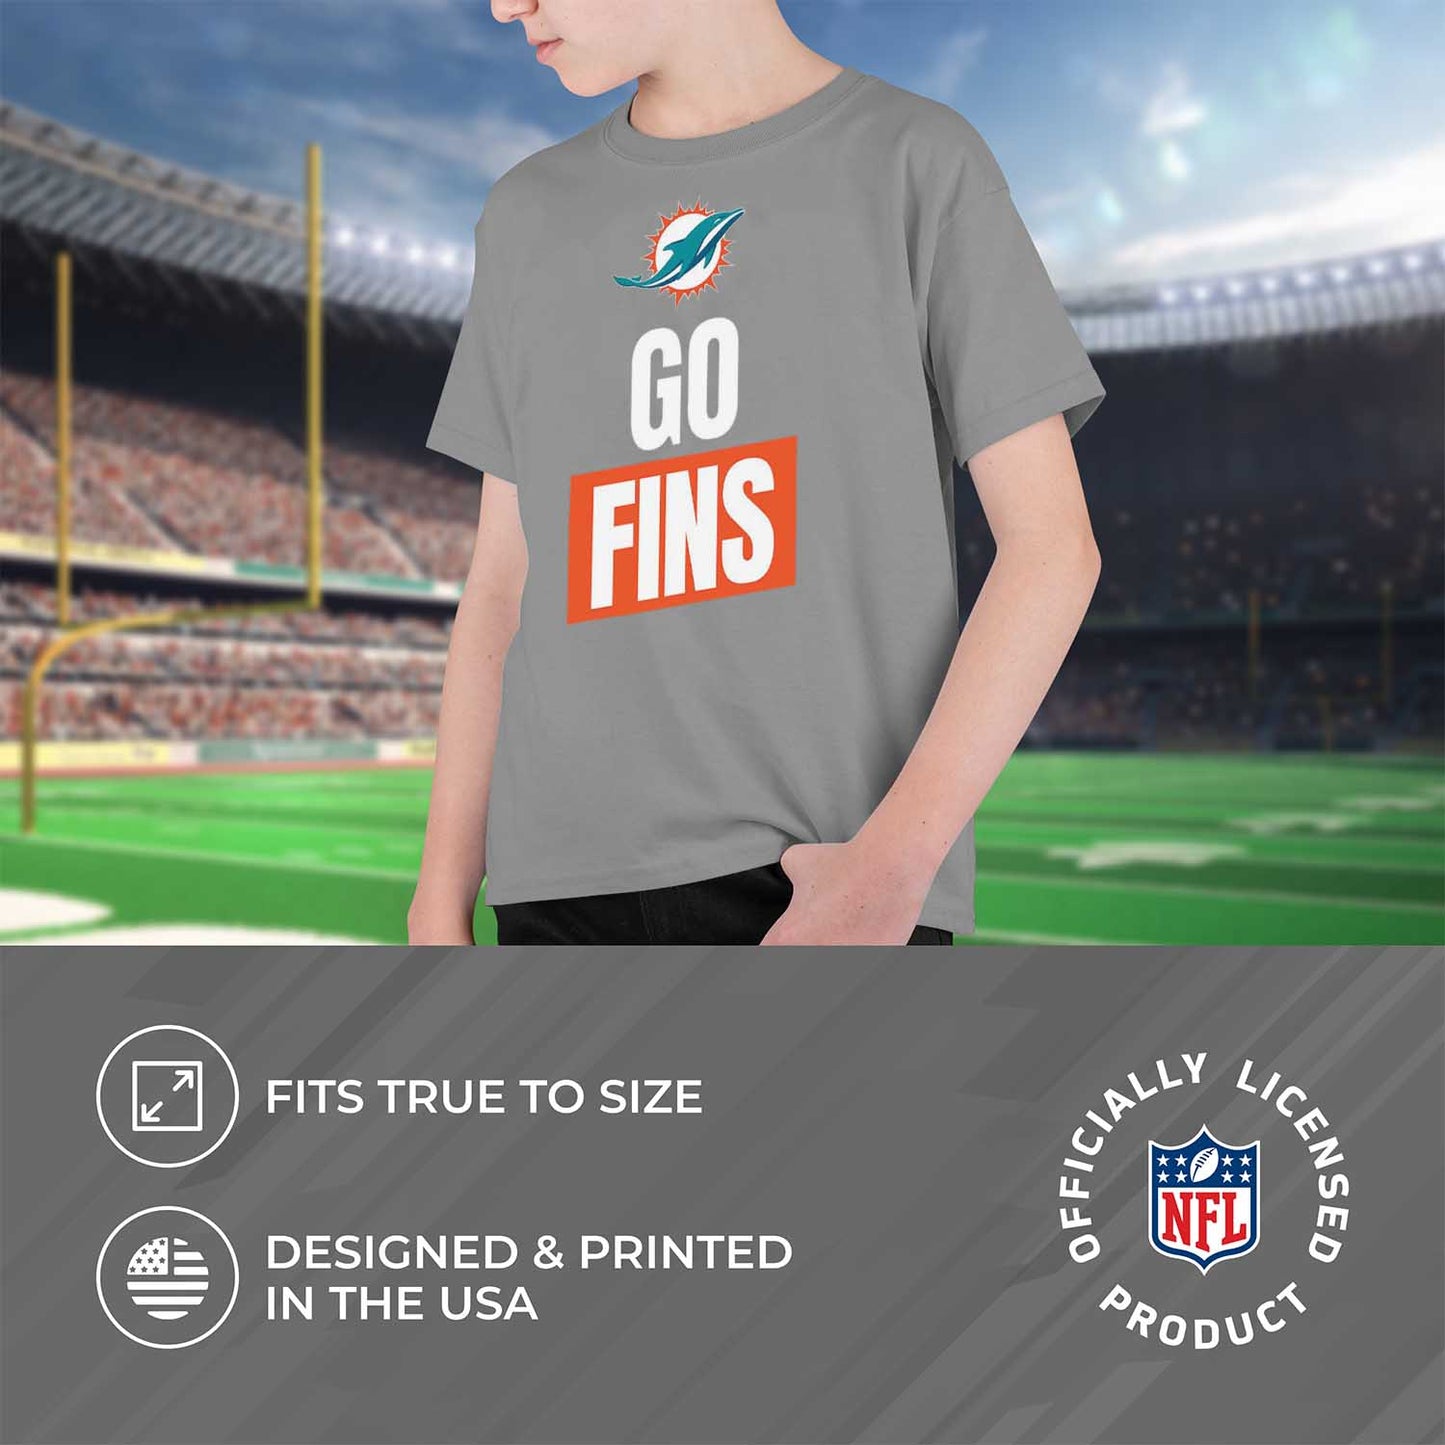 Miami Dolphins NFL Youth Team Slogan Short Sleeve Lightweight T Shirt - Gray